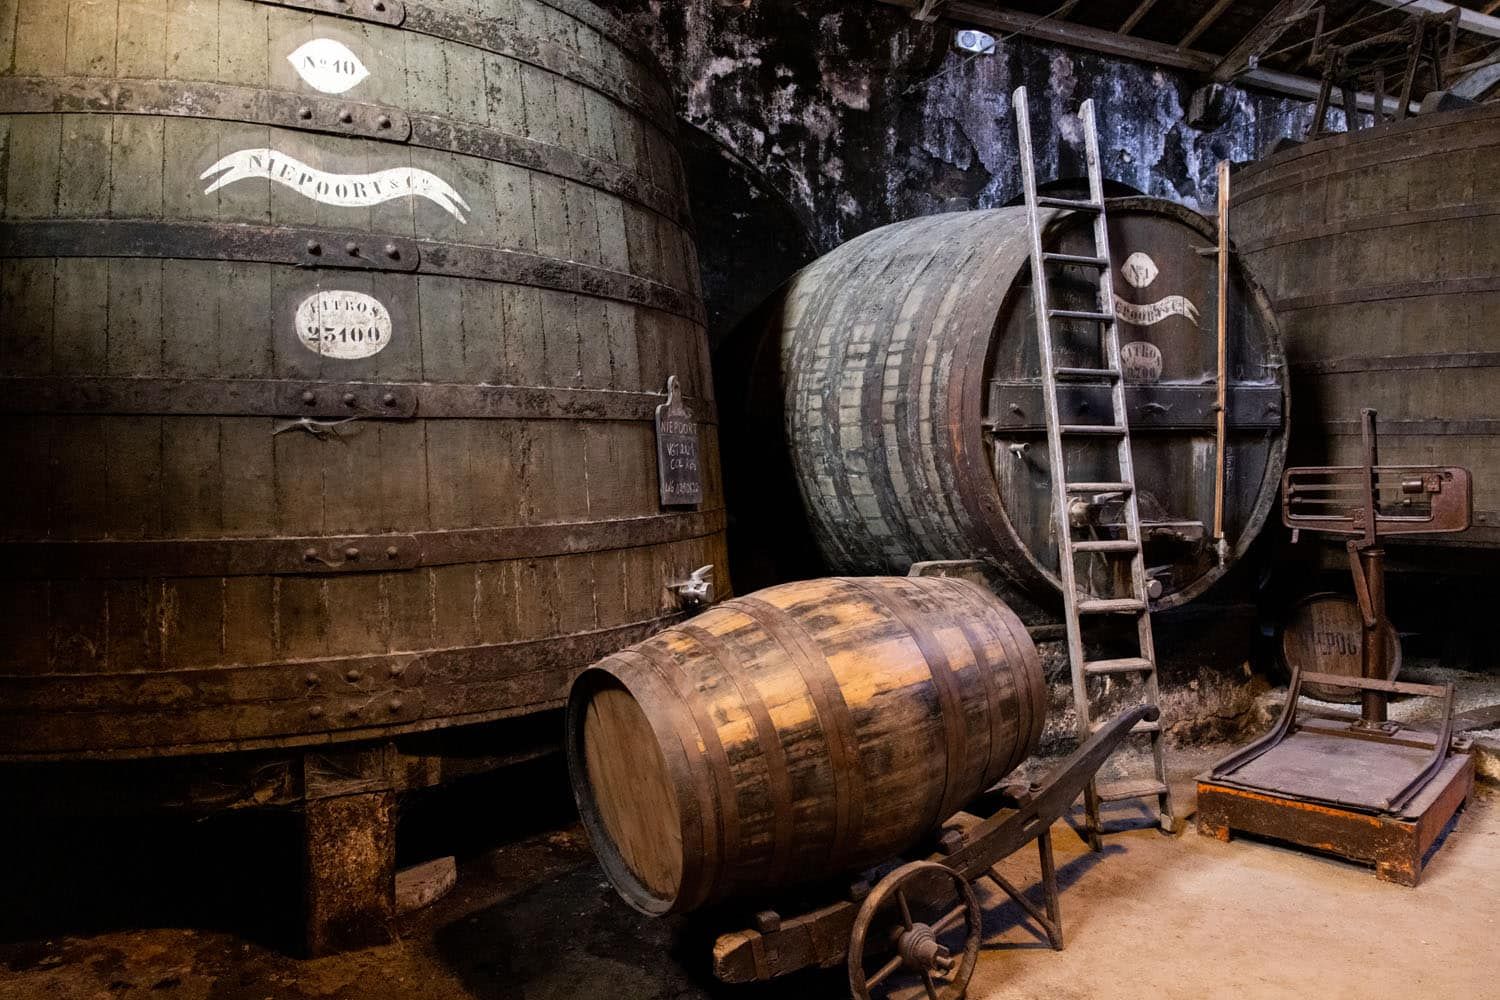 Niepoort Wine Barrels | How to visit Porto, Porto Travel Guide